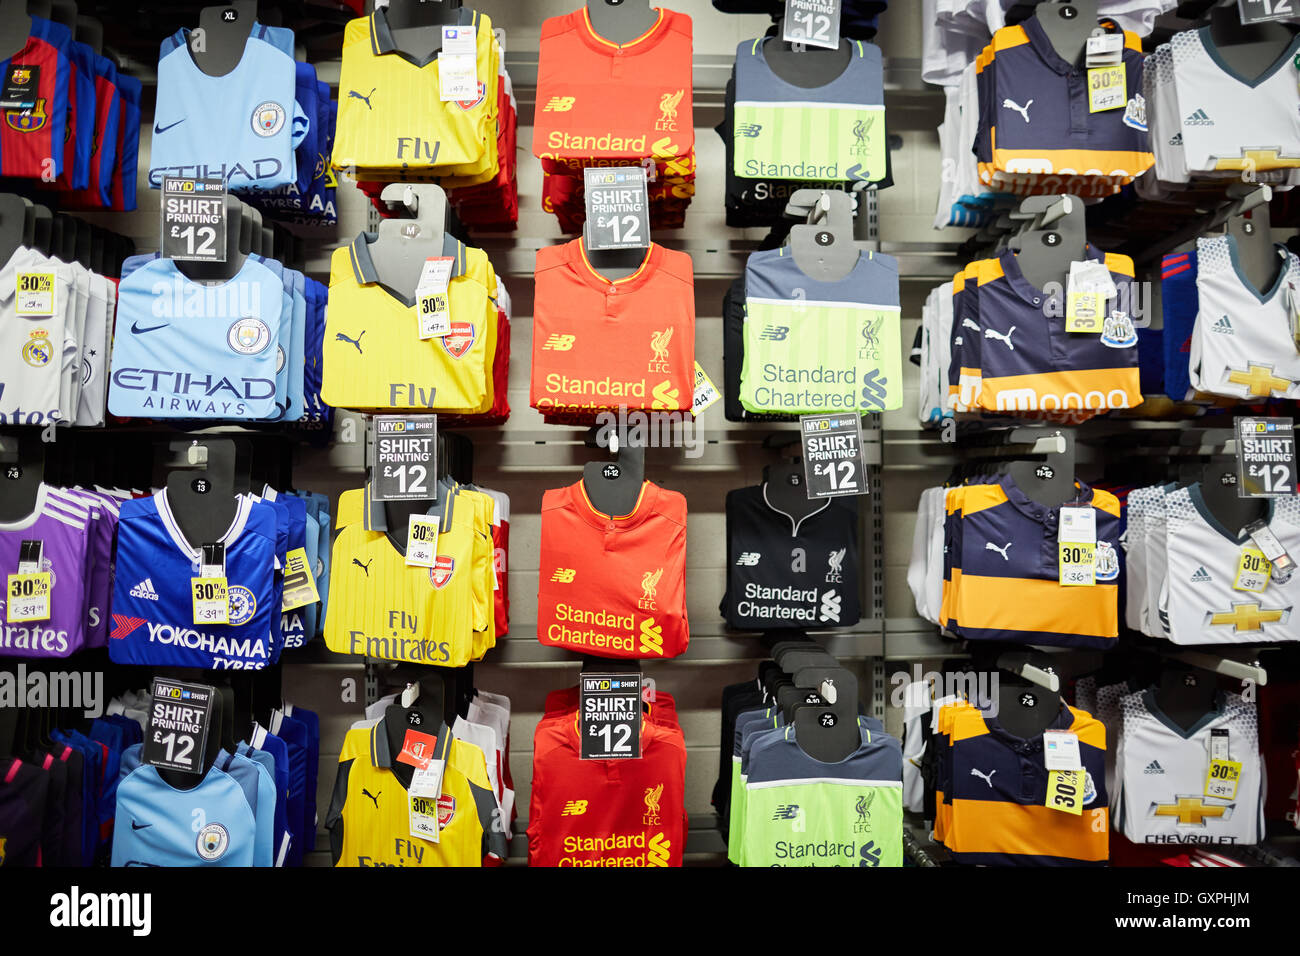 Sports direct football shirts shop   display premiership team official replica shirts tops strip wall display to buy Arsenal Liv Stock Photo